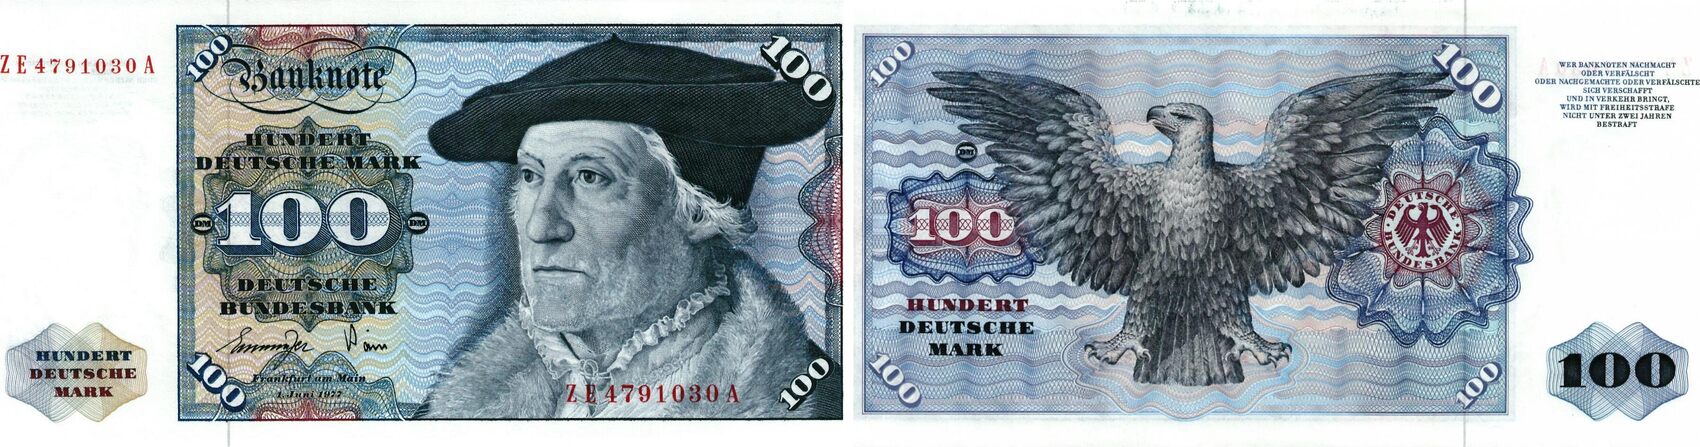 Deutsche mark. Дойч марки 1990 банкноты. 500 Дойч марок банкноты. Купюра 100 Дойч марок. Валюта Германии марка.